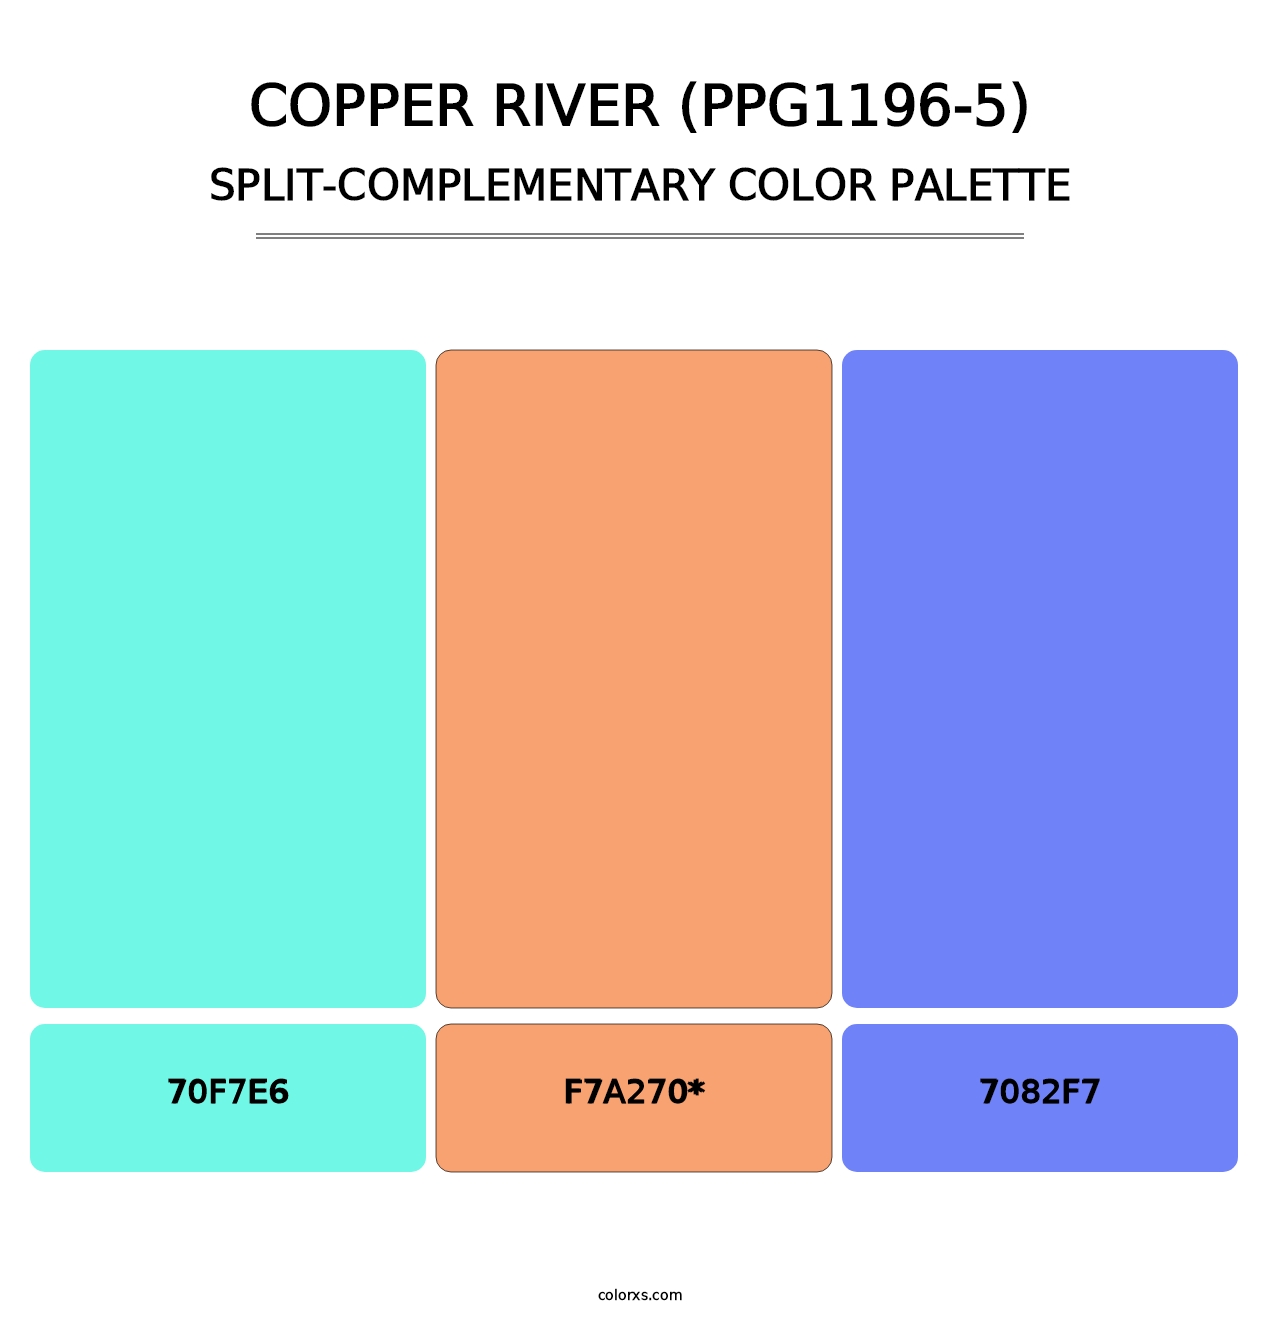 Copper River (PPG1196-5) - Split-Complementary Color Palette